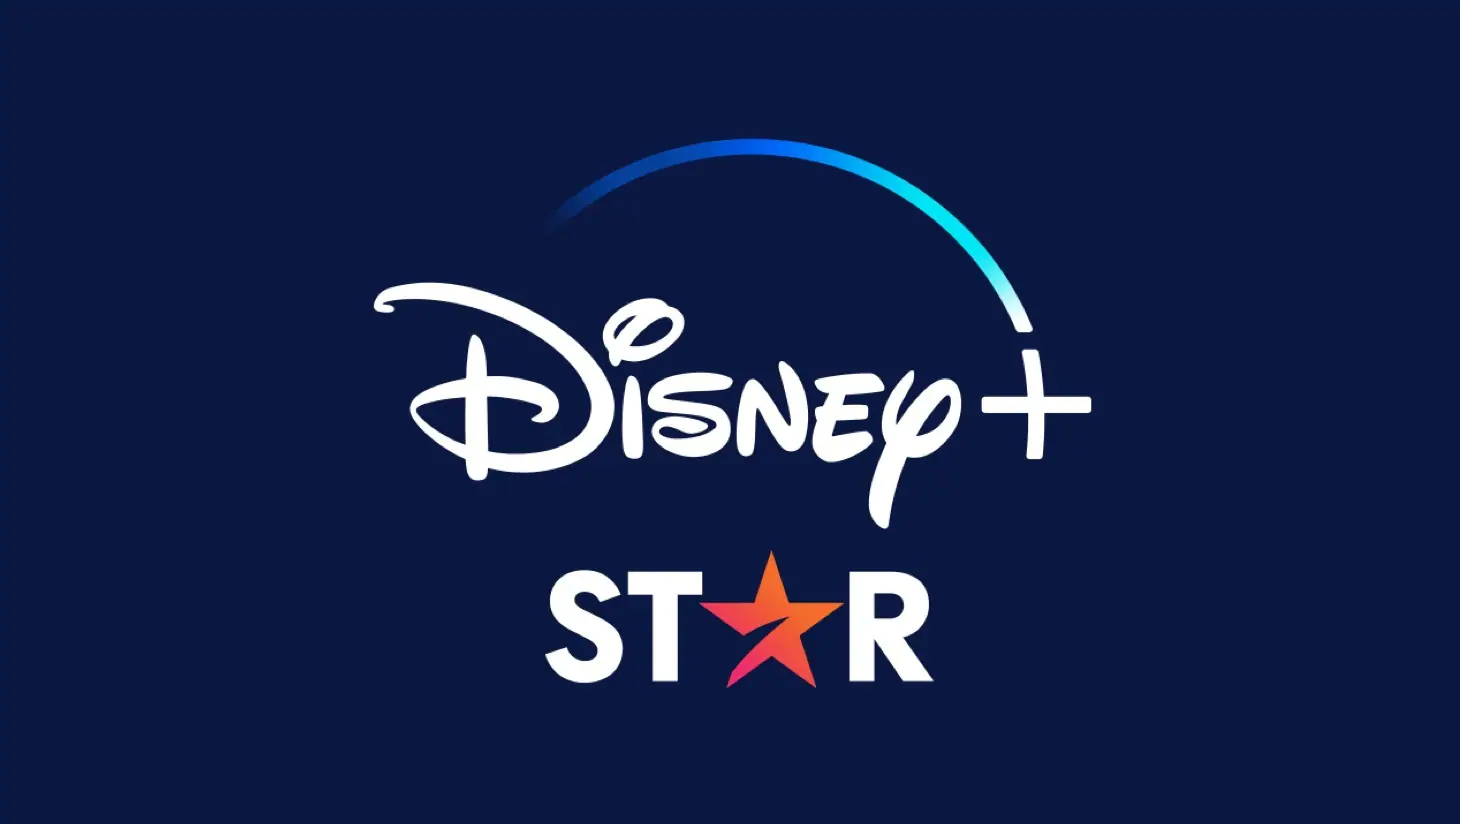 The Disney+ Star logo